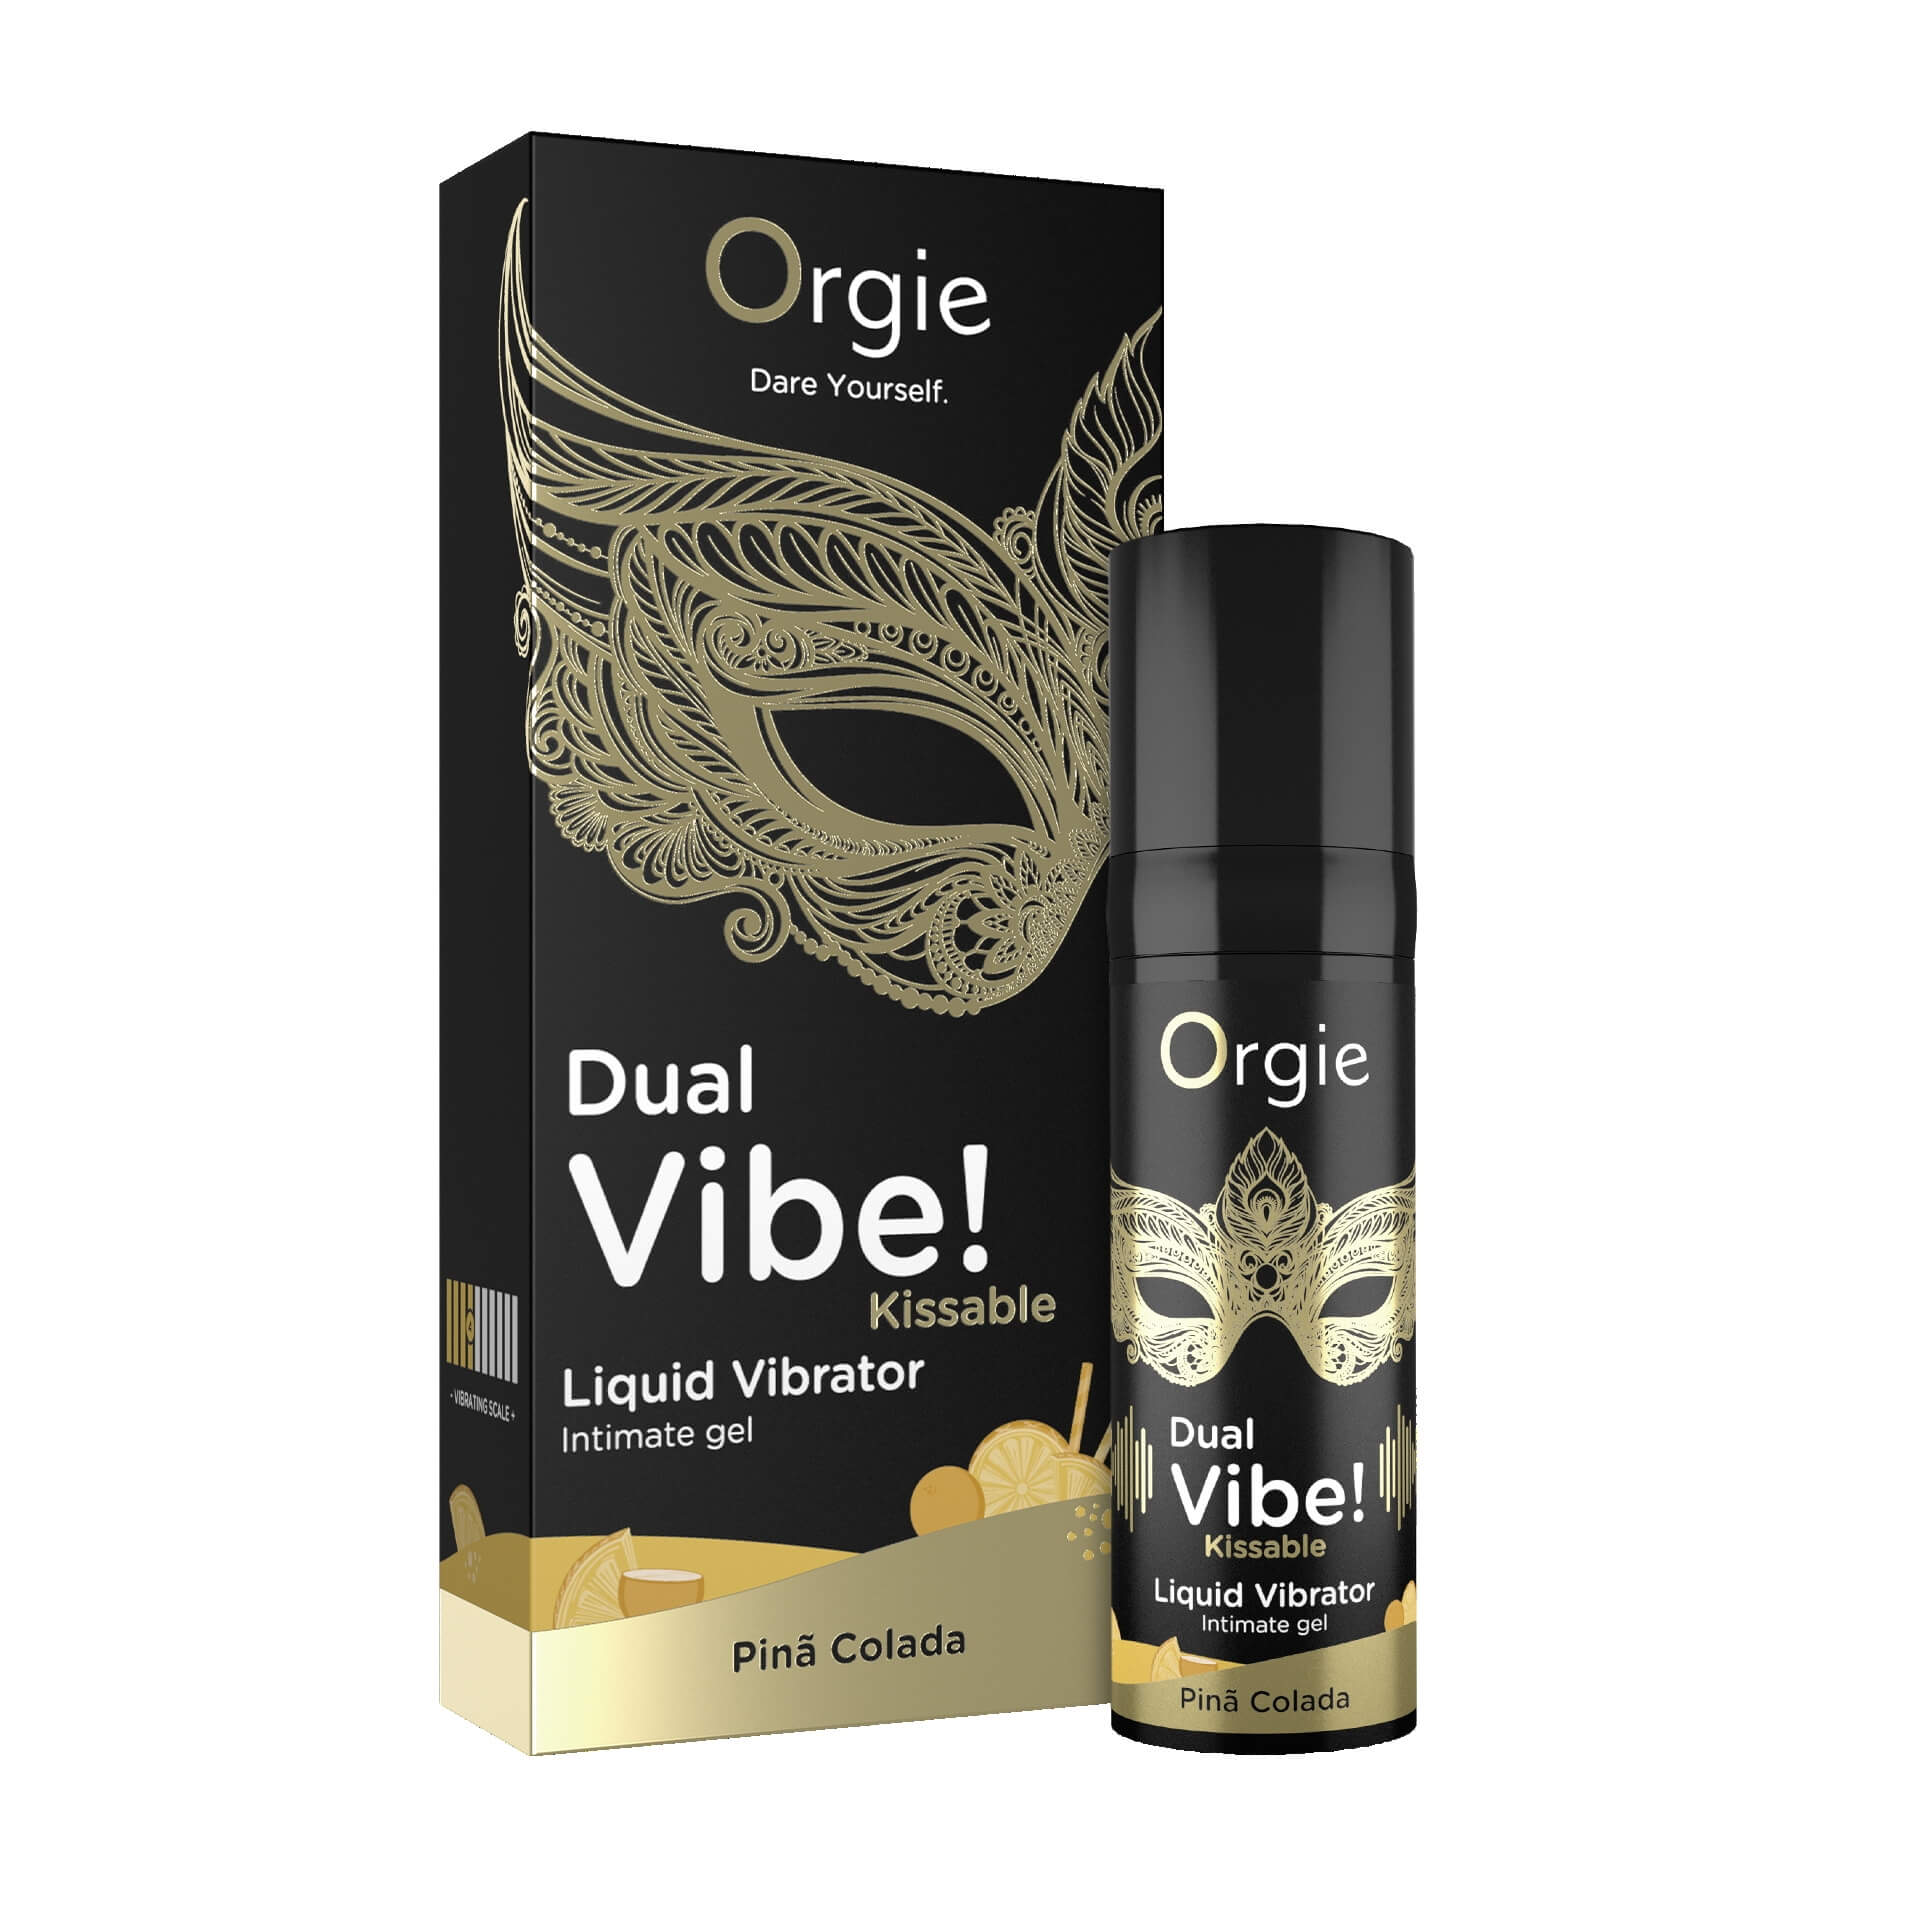 Orgie Dual Vibe! - folyékony vibrátor - Pinã Colada (15 ml) Parfüm, kozmetikum kép